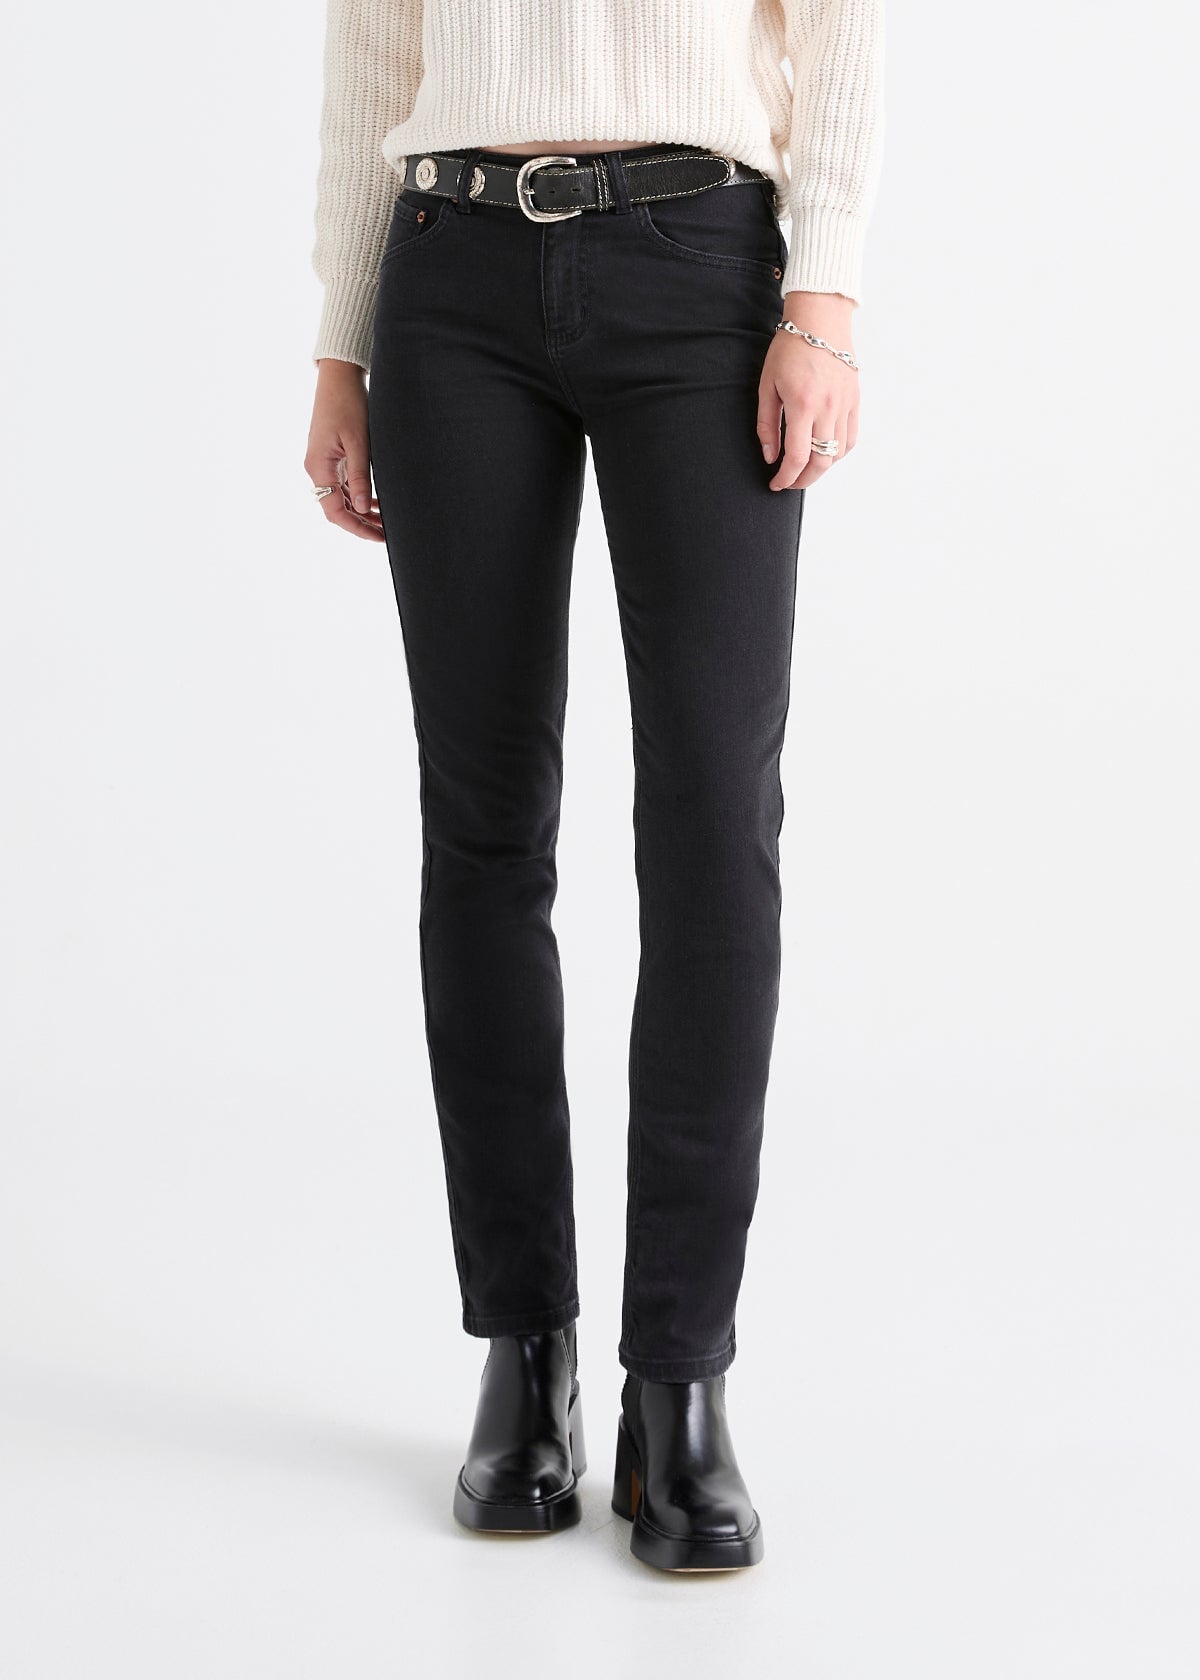 Women's Vintage Black Slim Straight Stretch Jeans Front